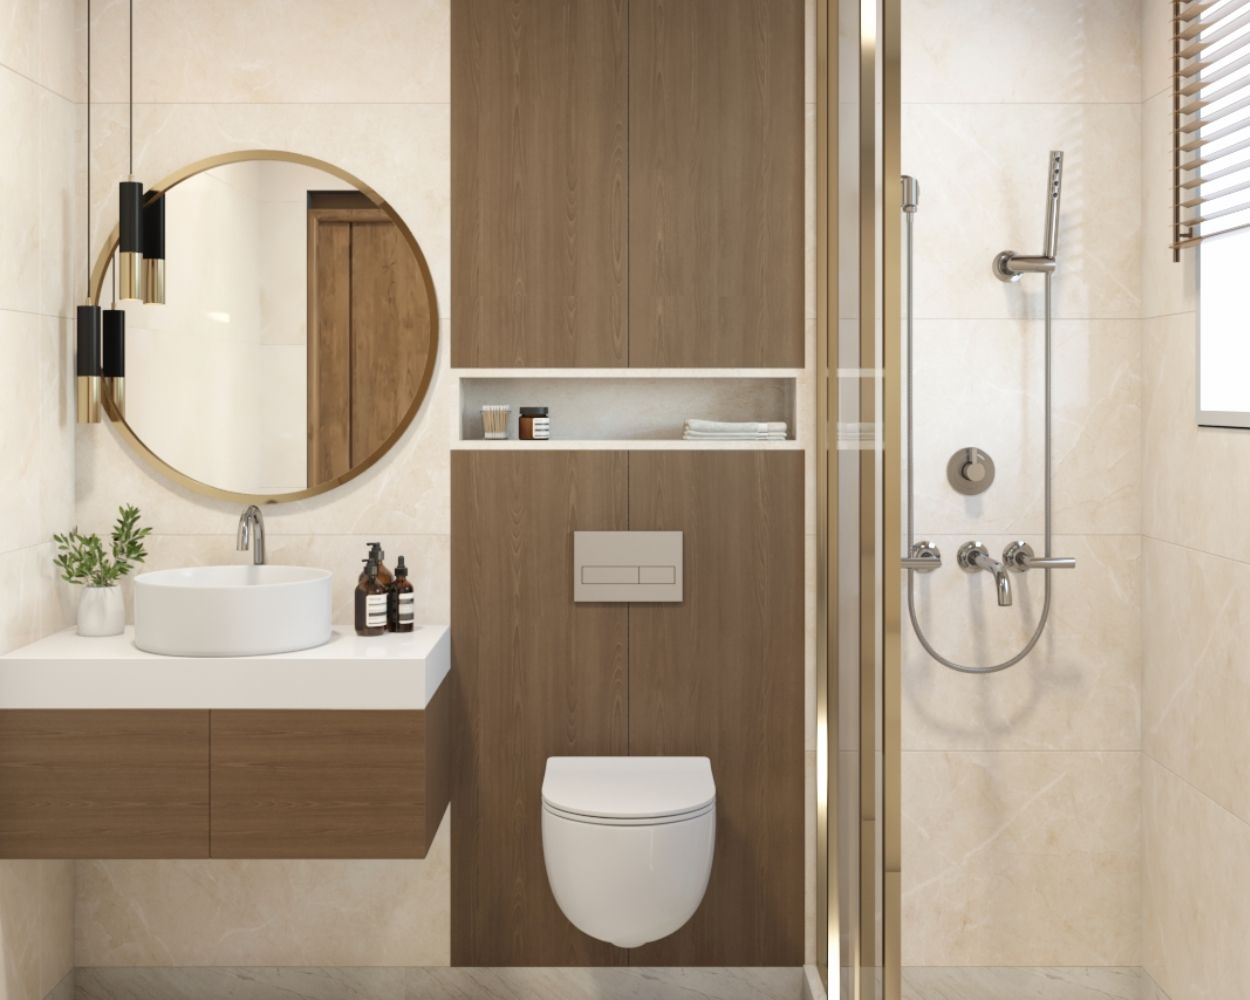 Contemporary High-Gloss Cream-Toned Bathroom Tile Design